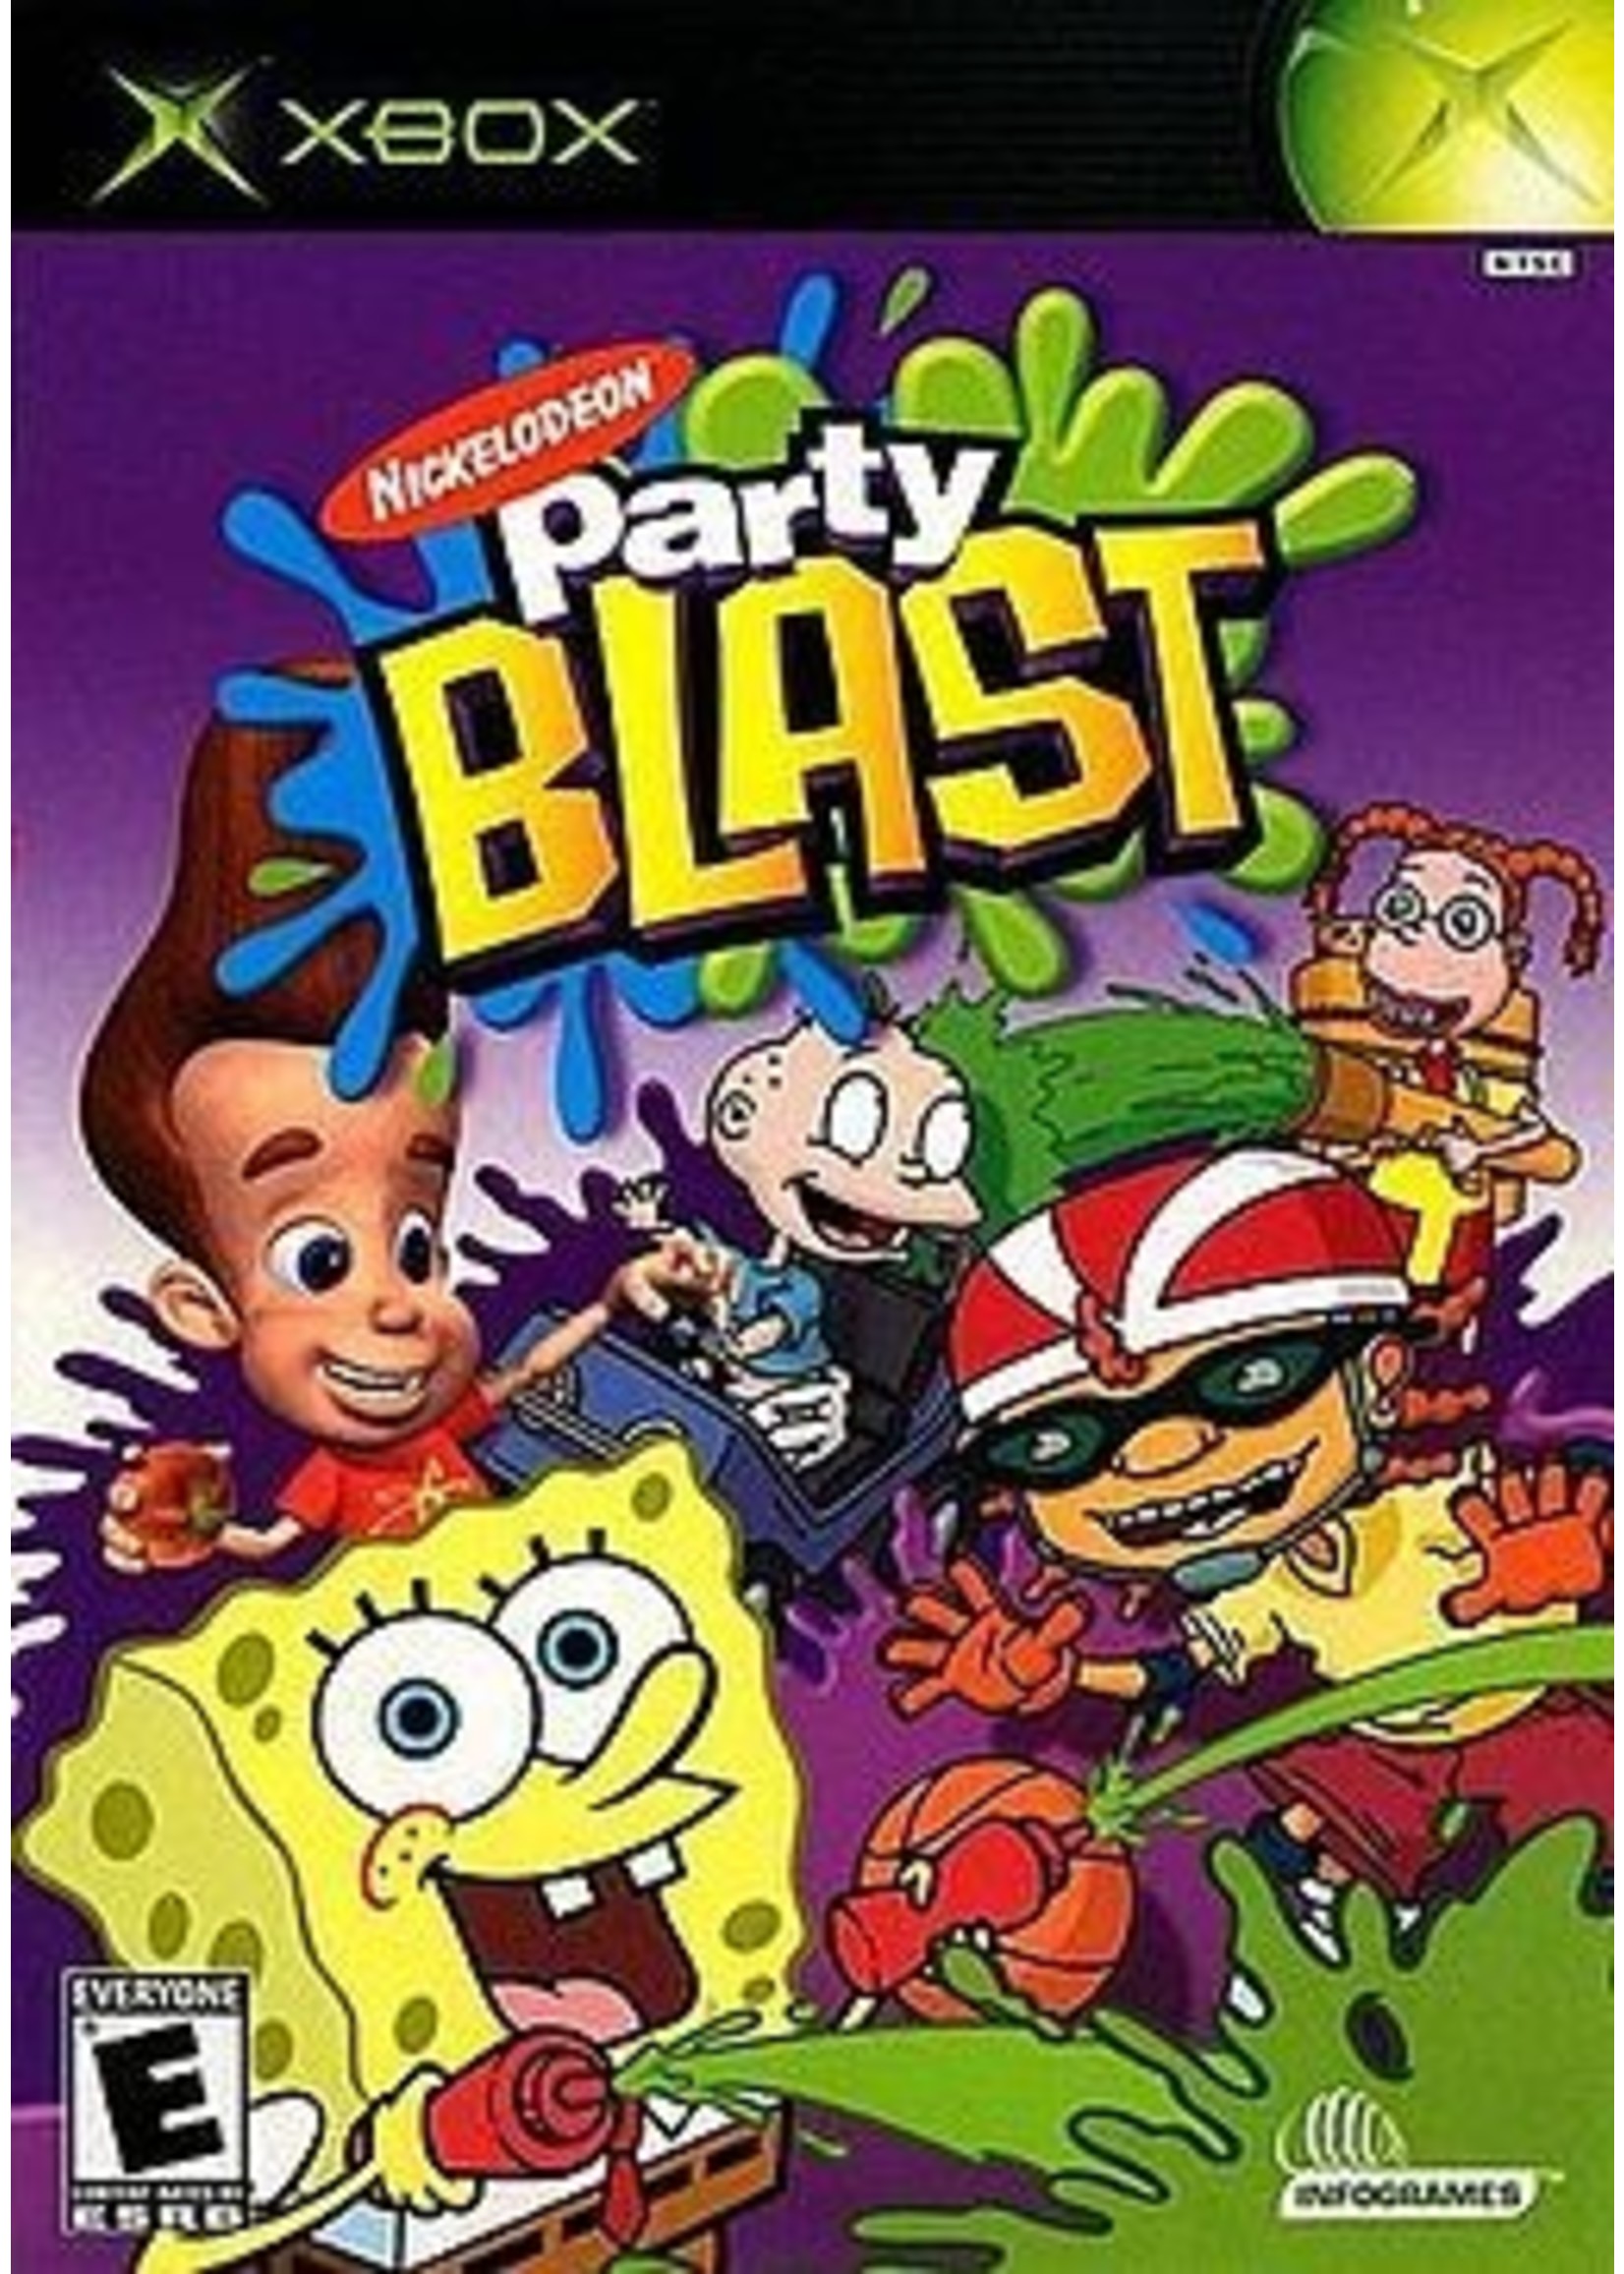 Microsoft Xbox Nickelodeon Party Blast